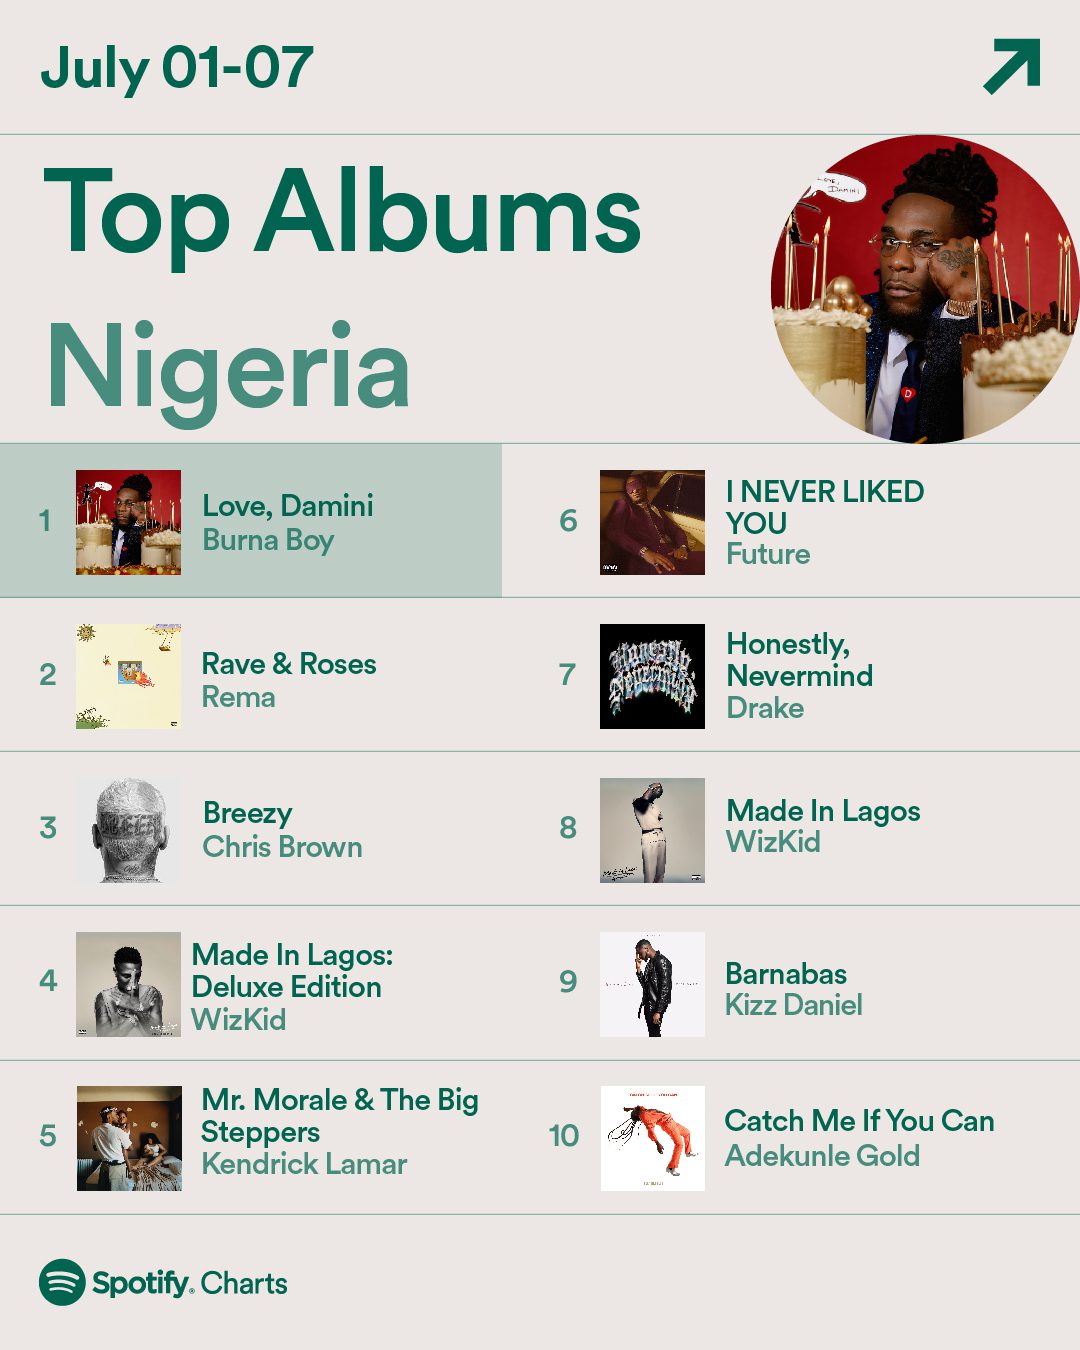 Top Album’s in Nigeria on Spotify